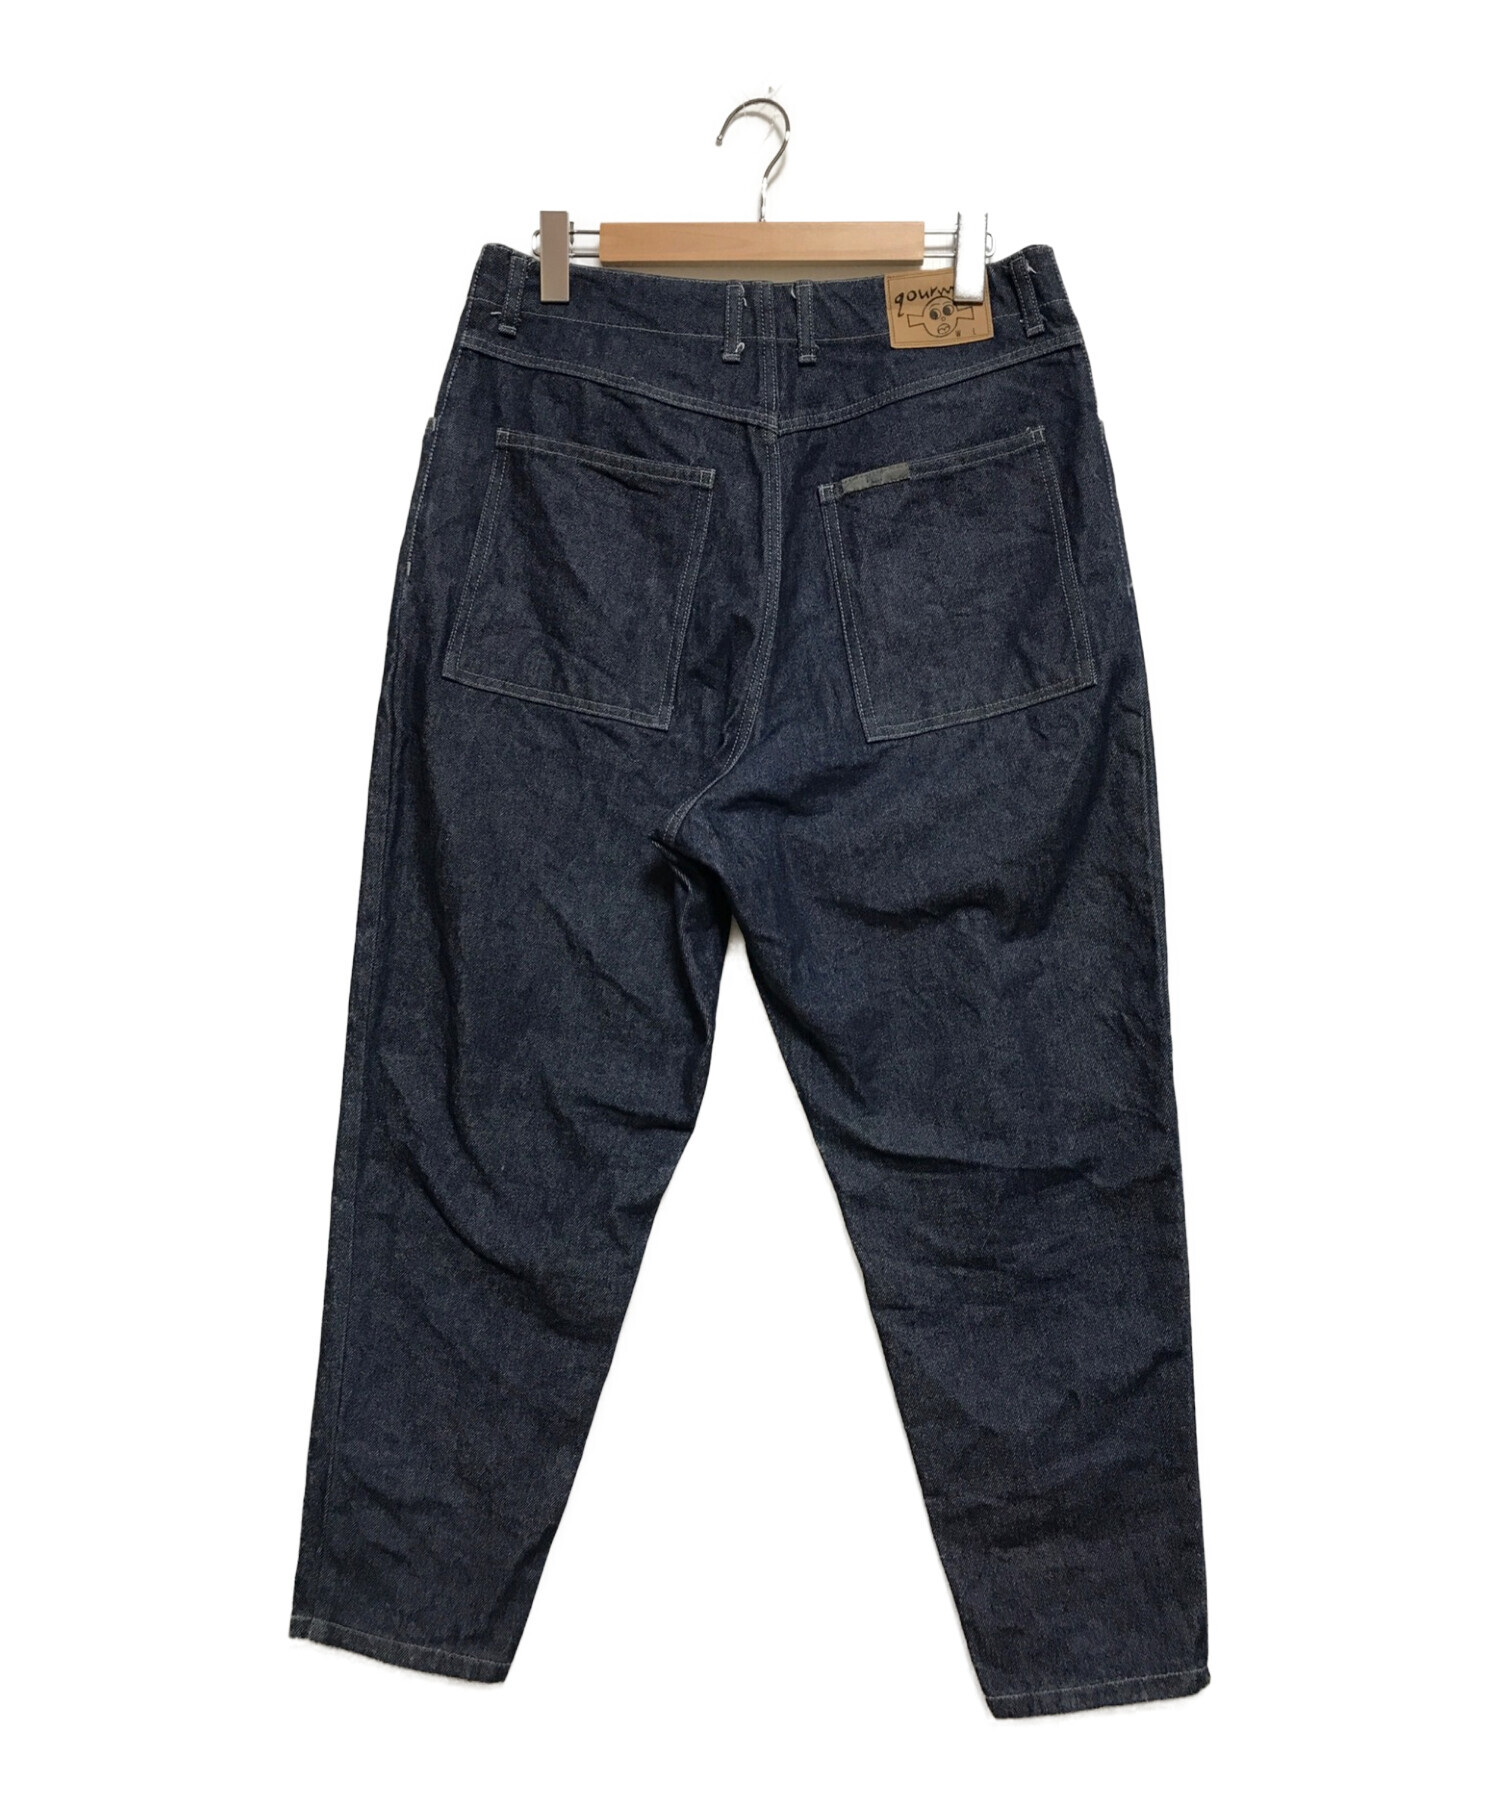 gourmet  jeans グルメジーンズ lean サイズ32